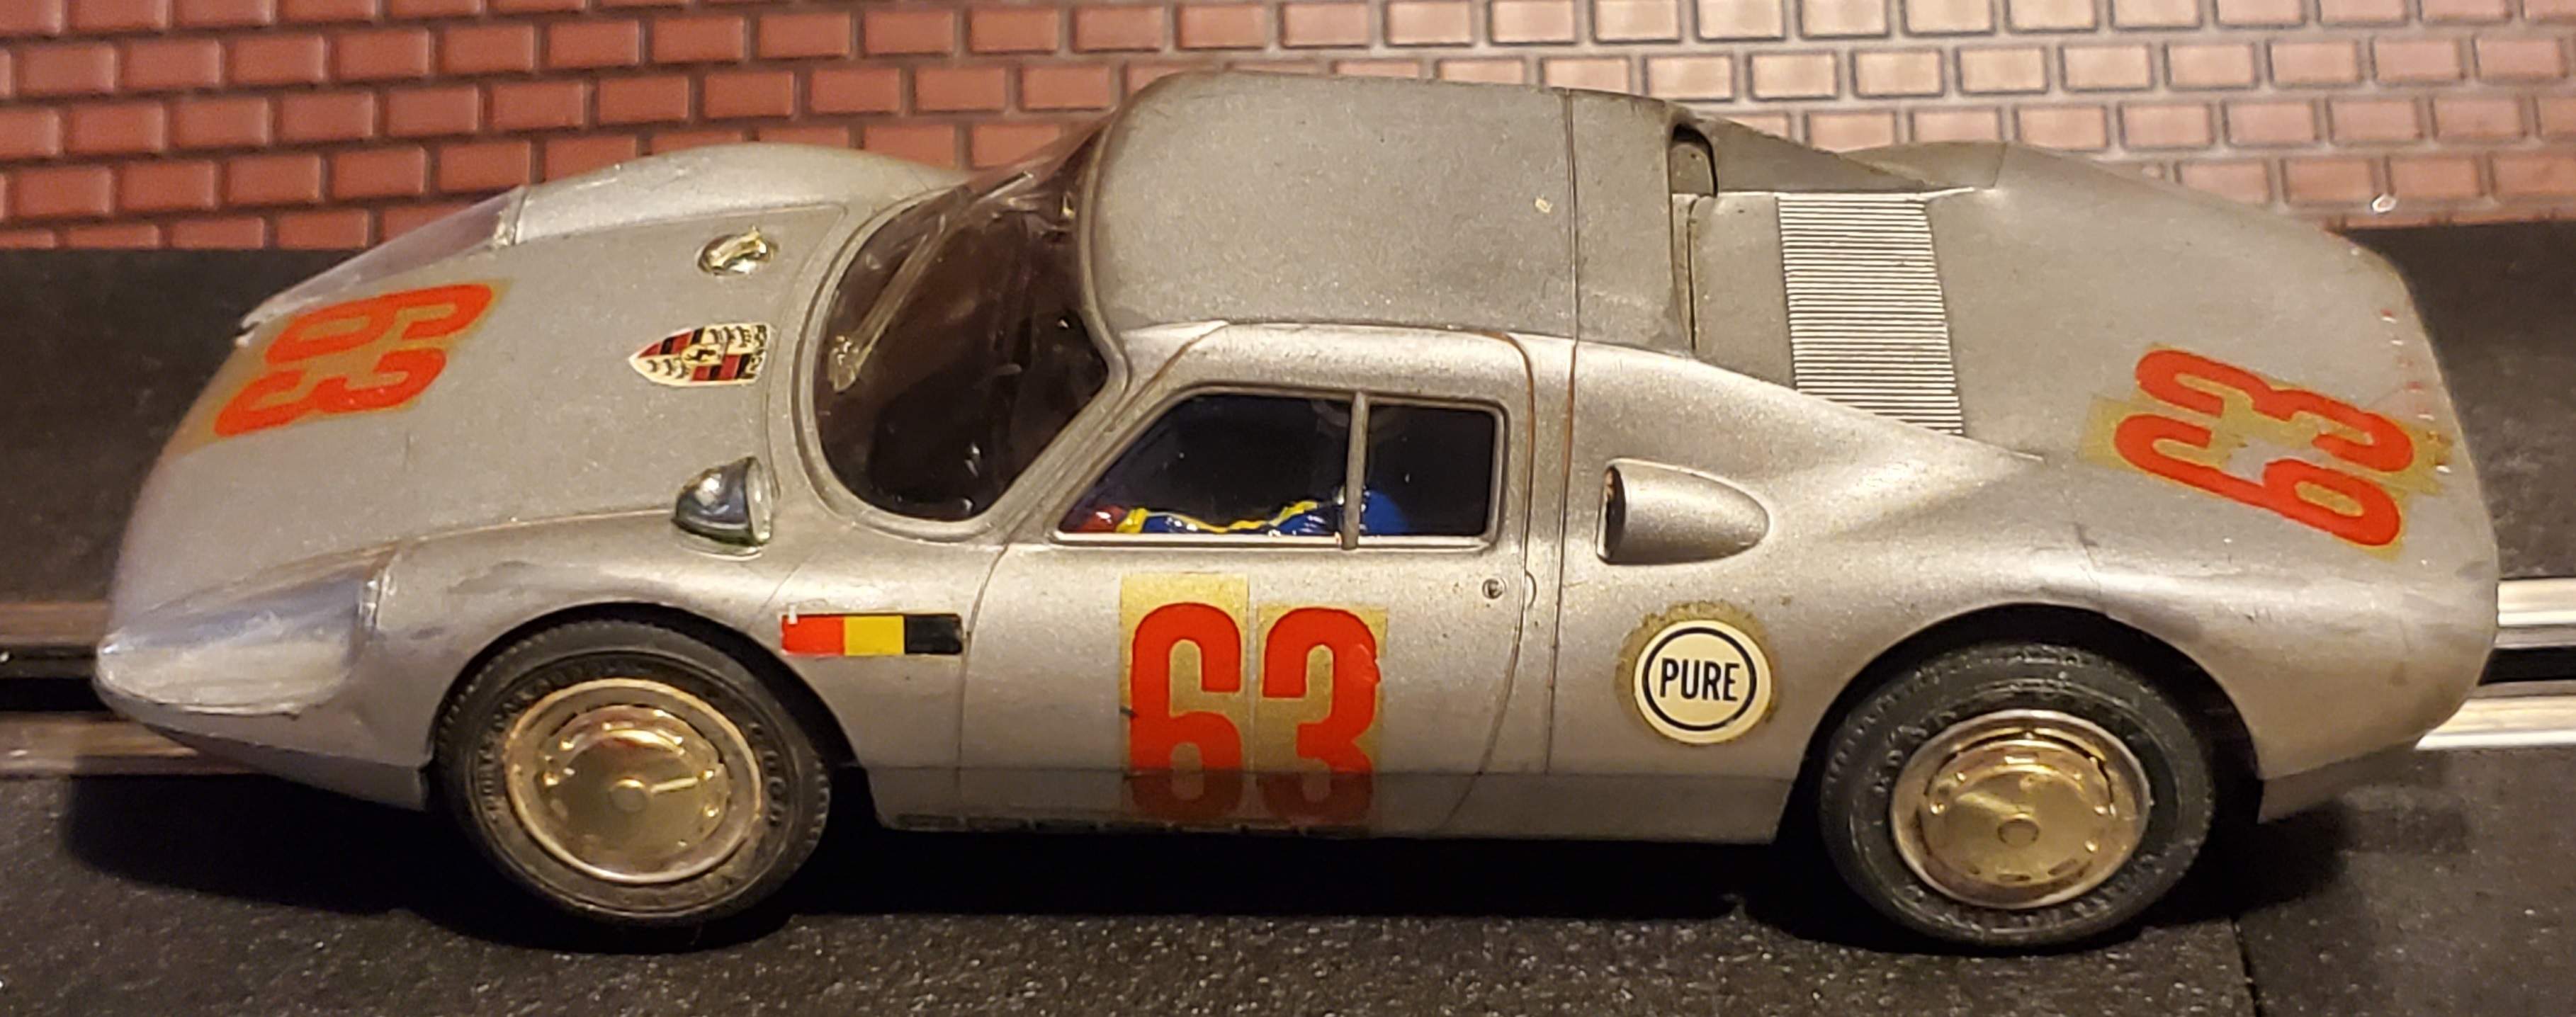 * Sale, Save $30 off our Ebay store price * 1963 Porsche 904 GTS - Car 63